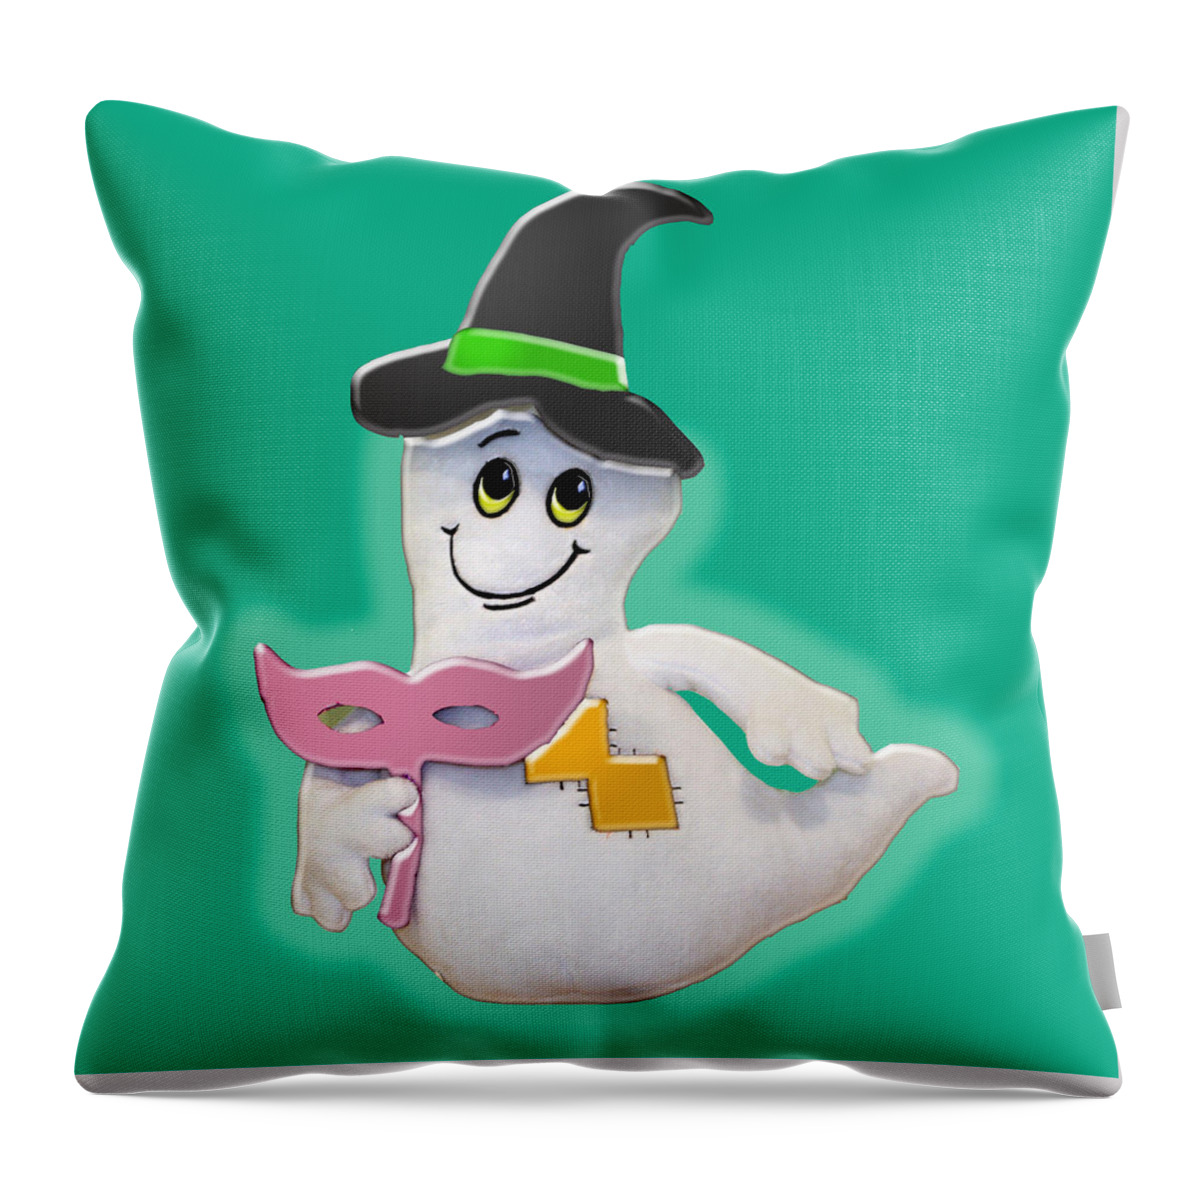 Cartoons Throw Pillow featuring the digital art Cute Glowing Ghost by Karen Nicholson